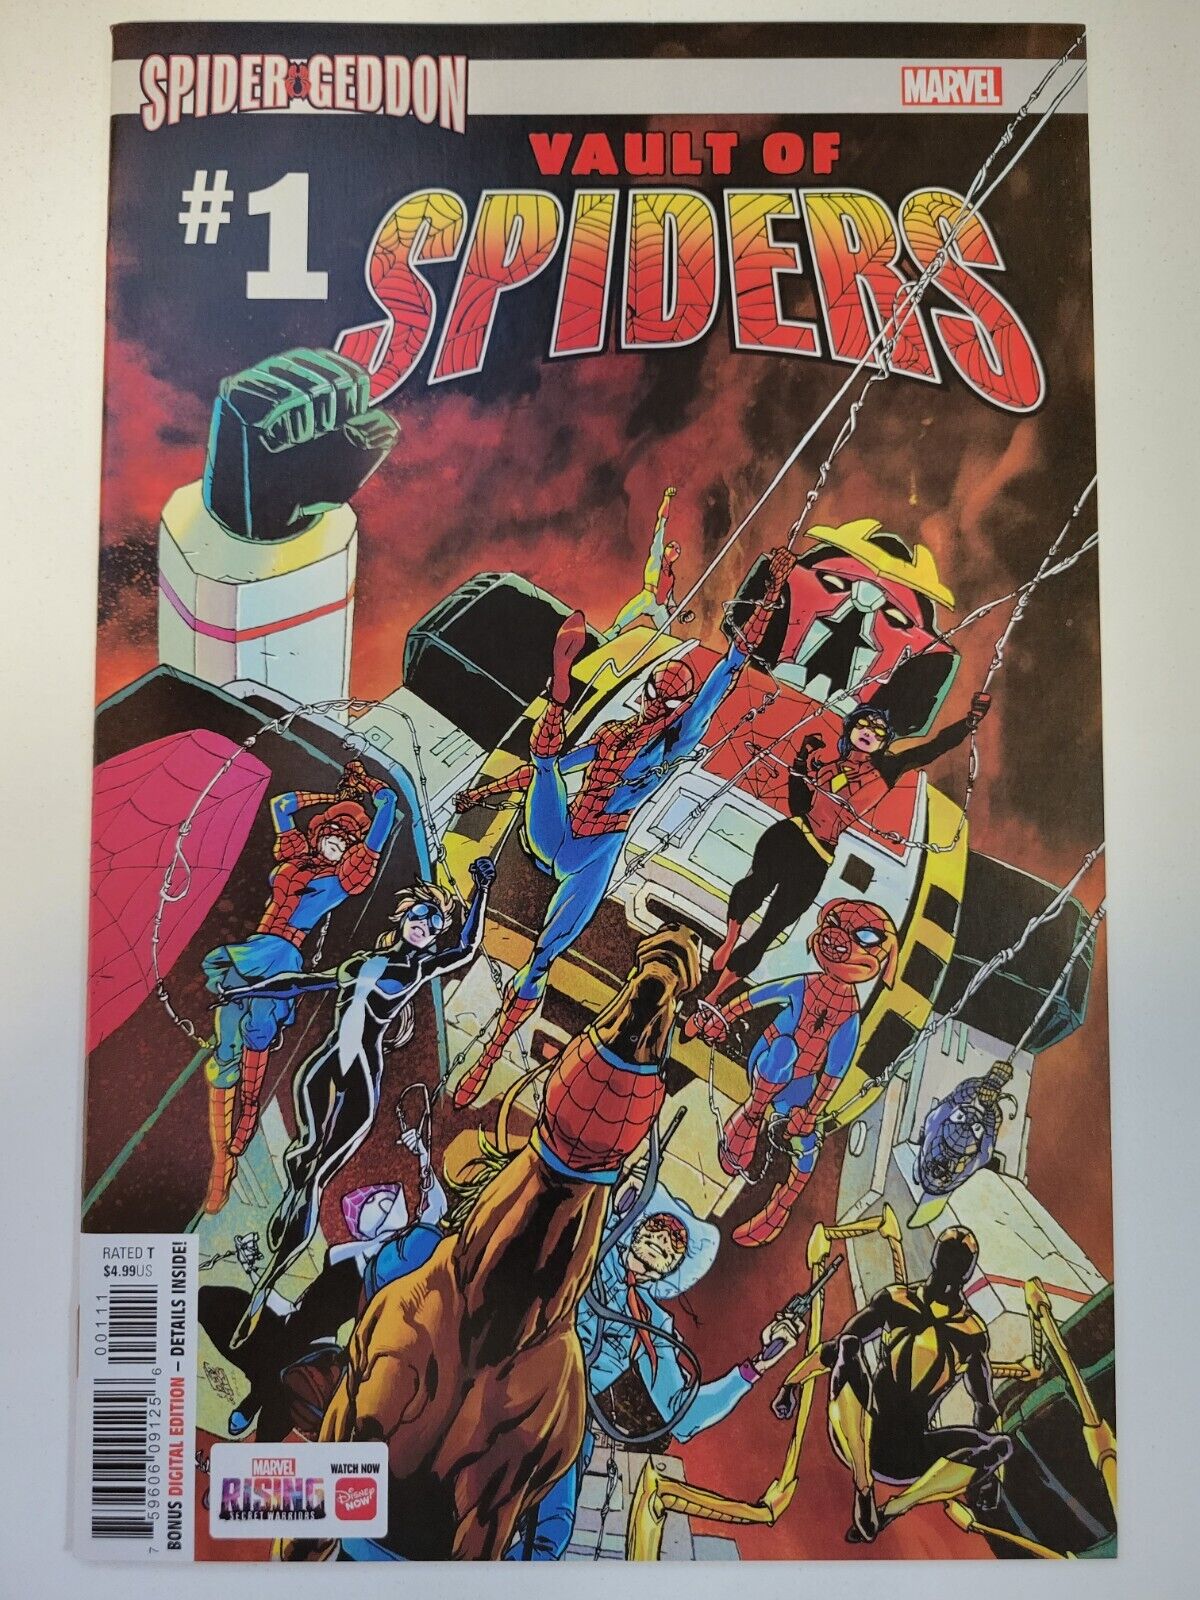 Vault Of Spiders #1 #2 Complete Marvel 2018 Series Spider-Geddon 9.4 Near Mint